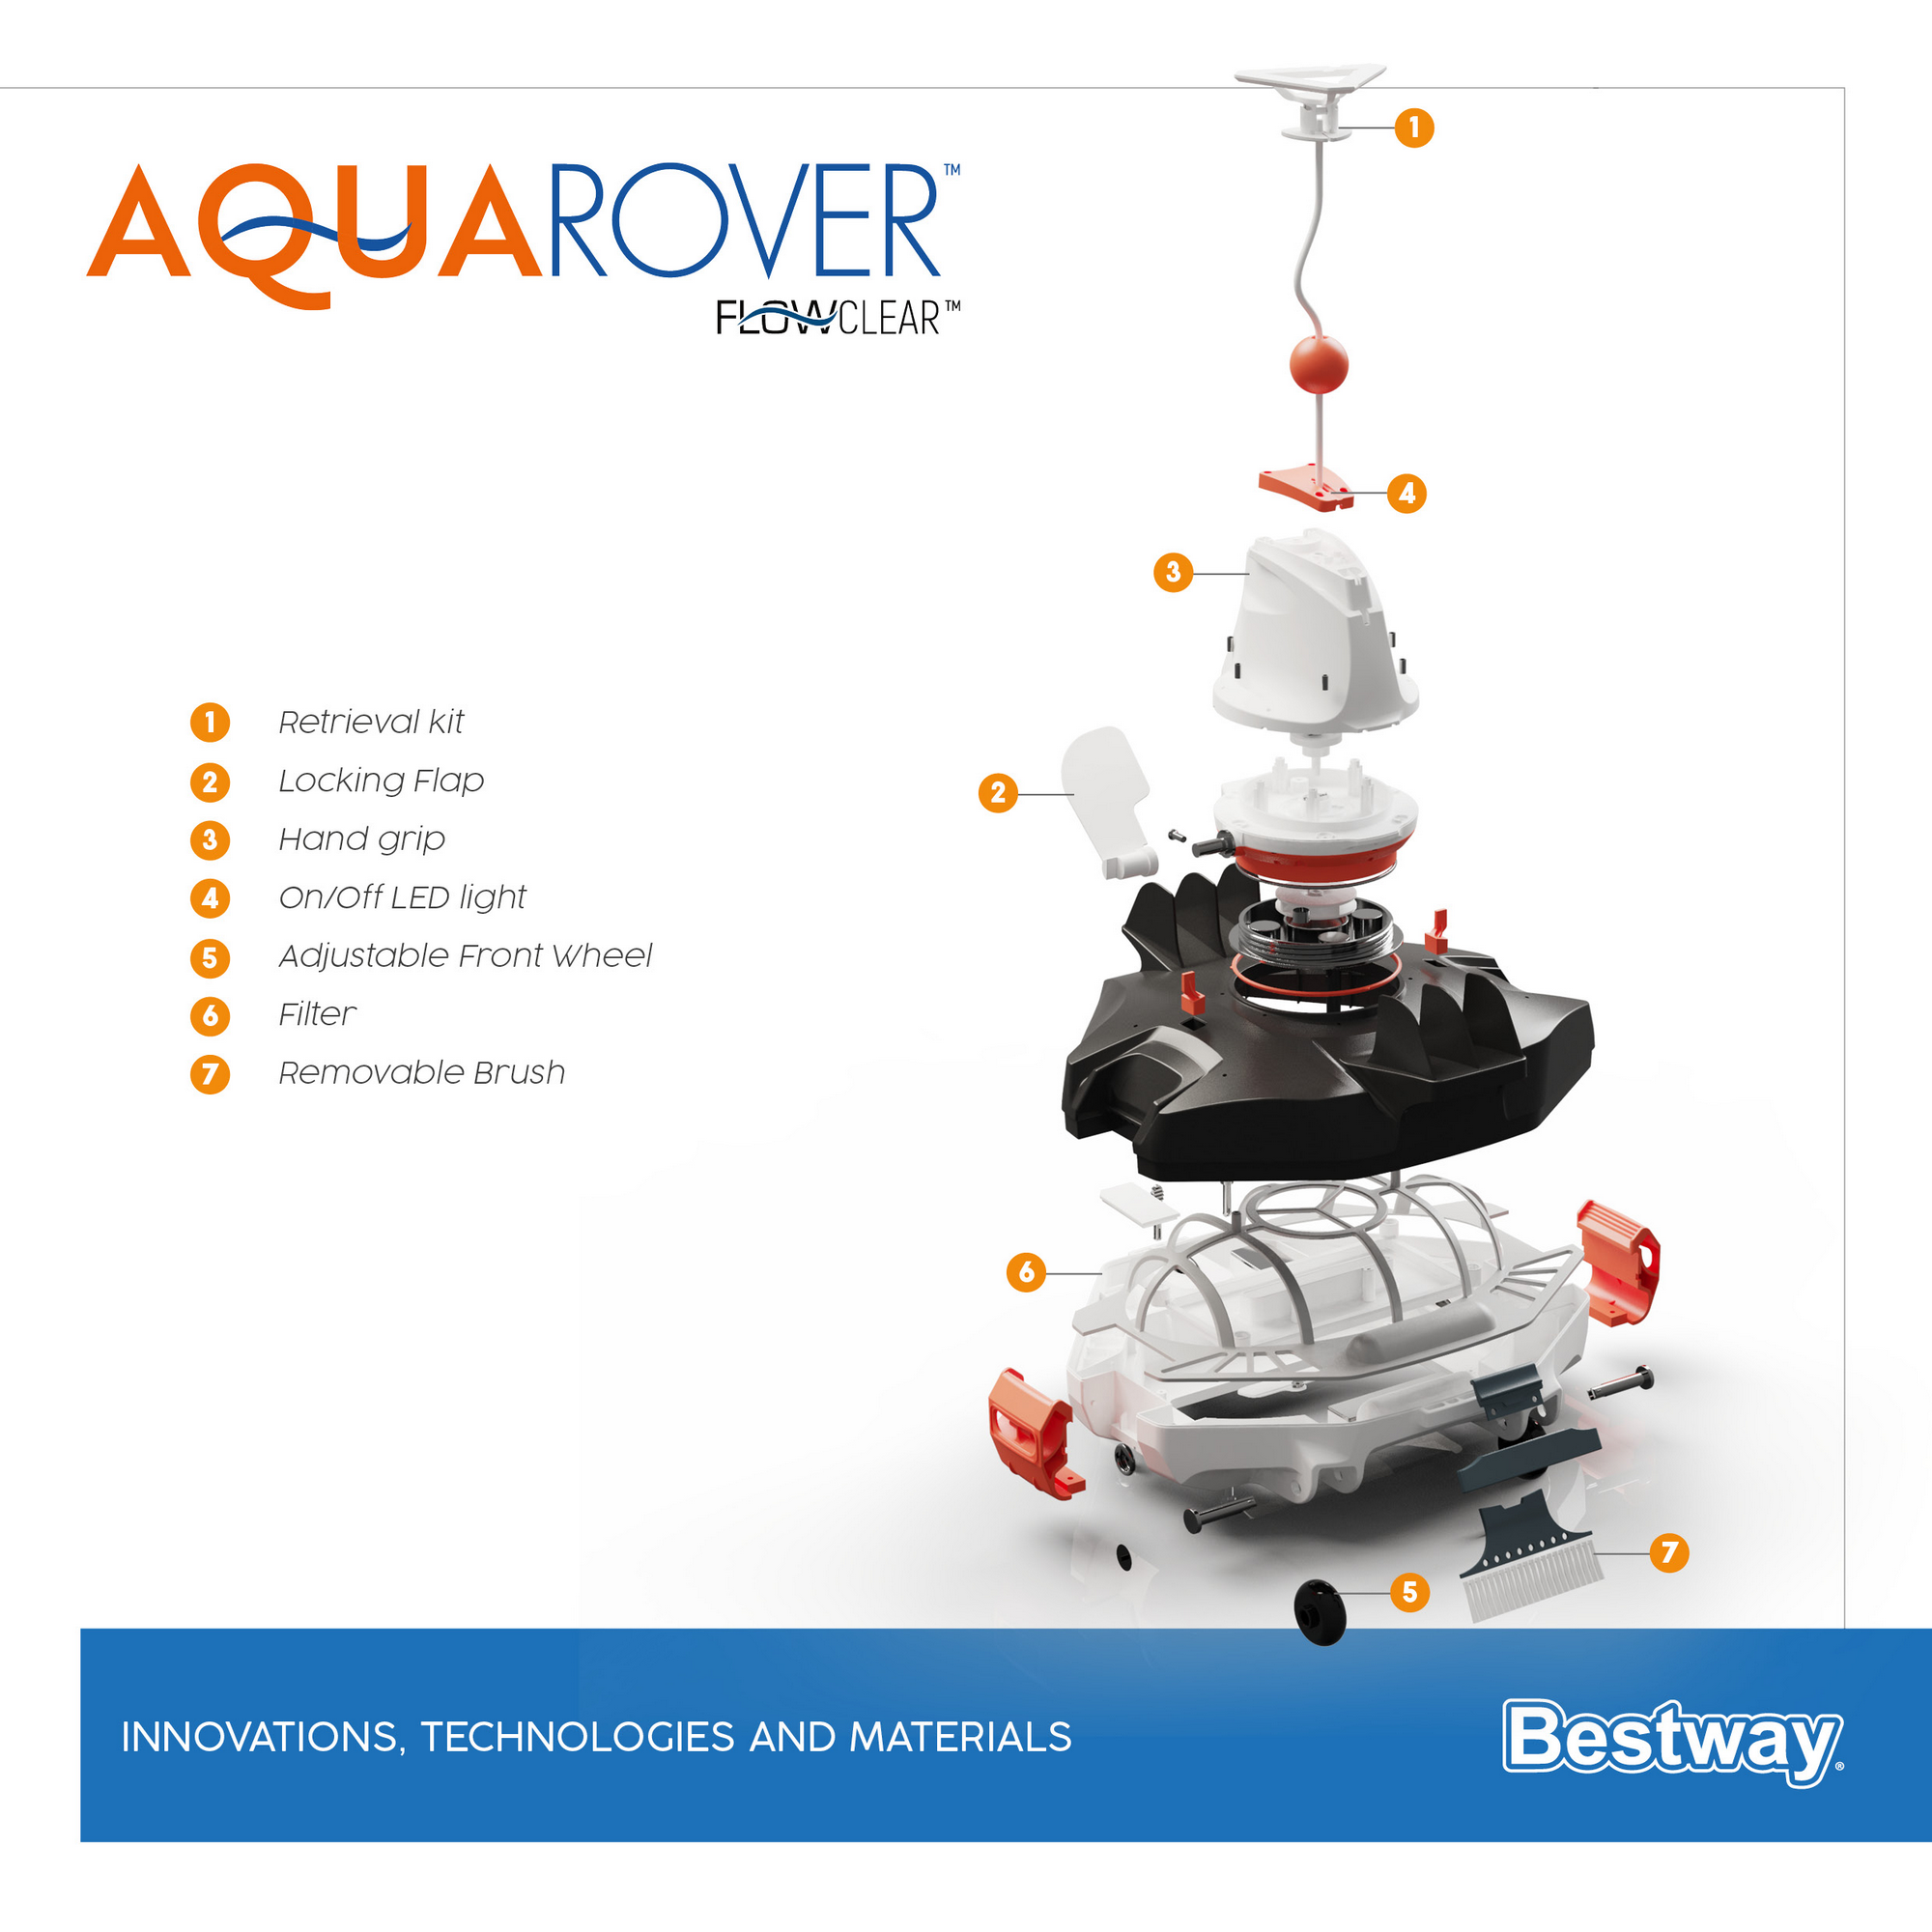 Bodenpoolsauger 'Flowclear Aquarover' schwarz/weiß, mit Akku + product picture